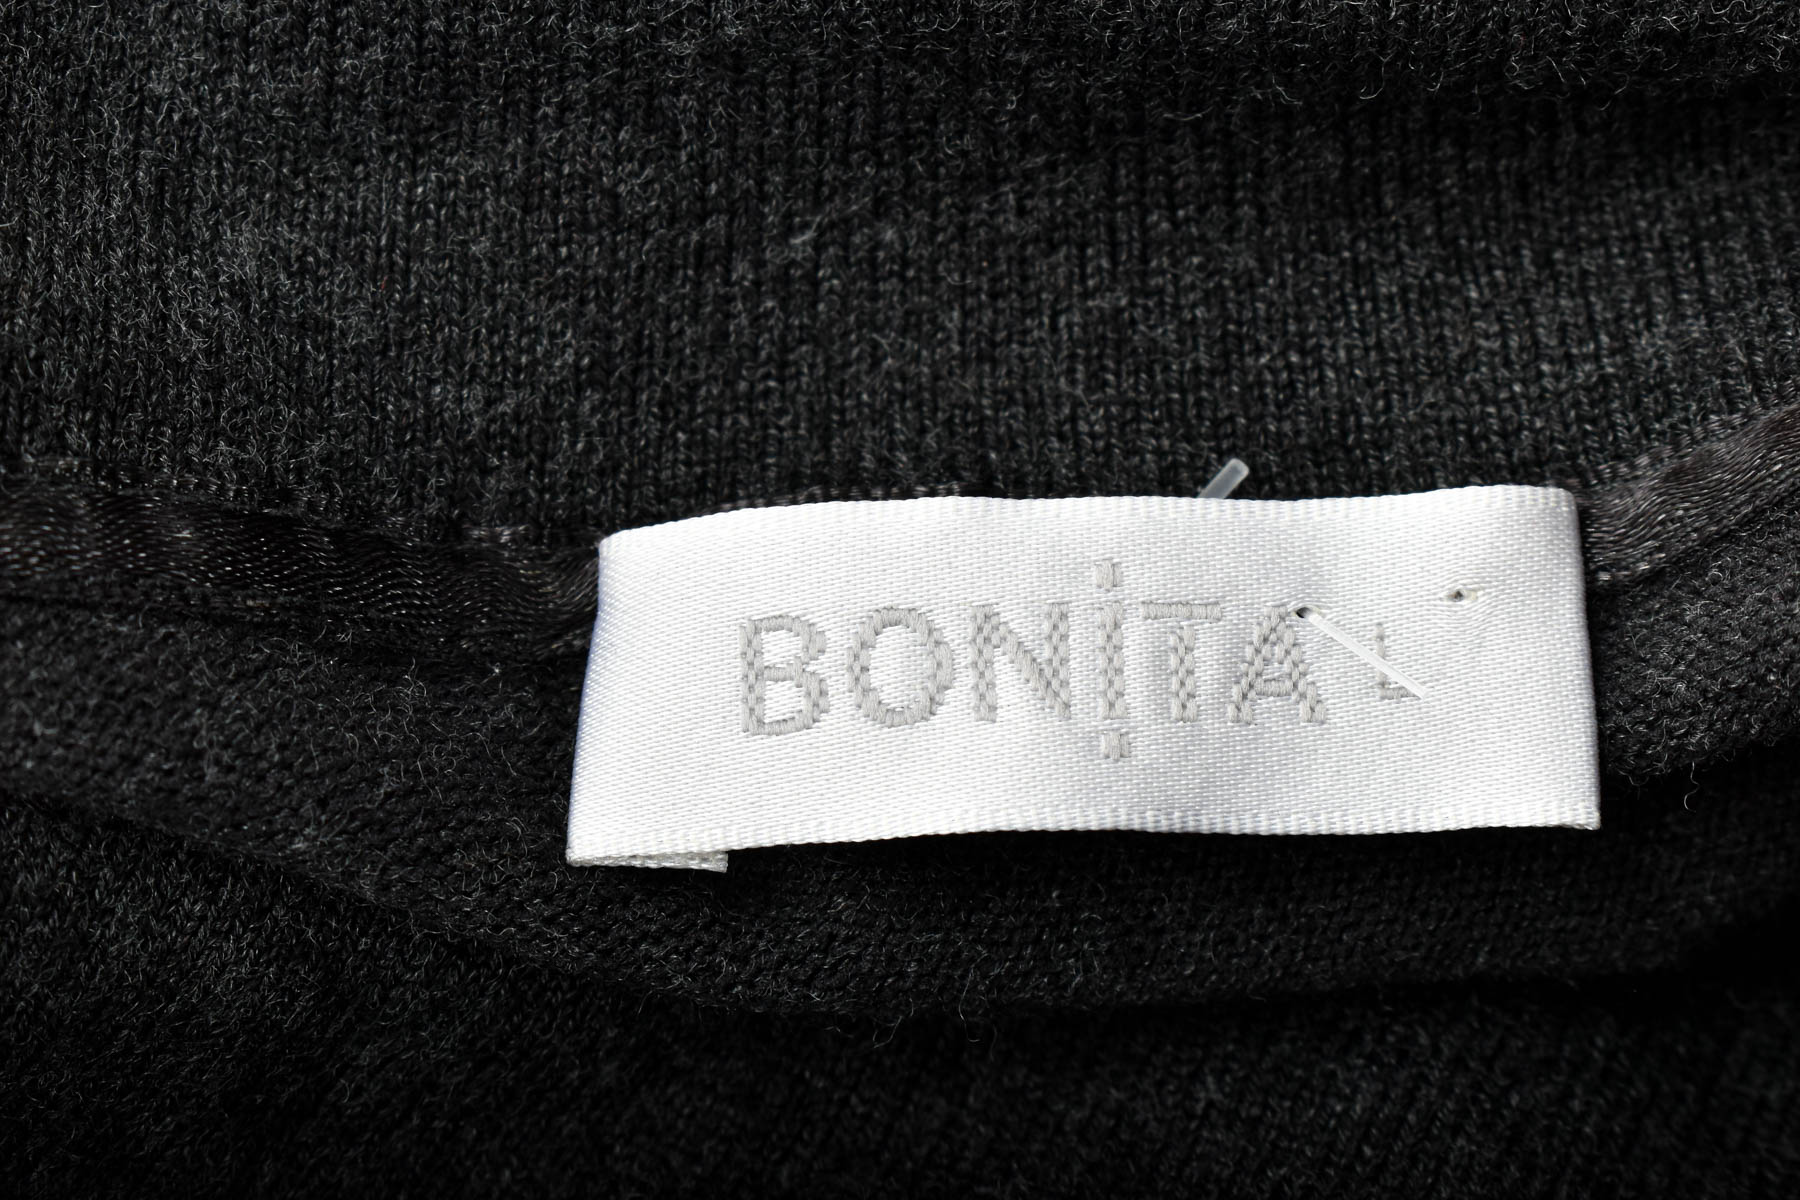 Дамски пуловер - BONiTA - 2